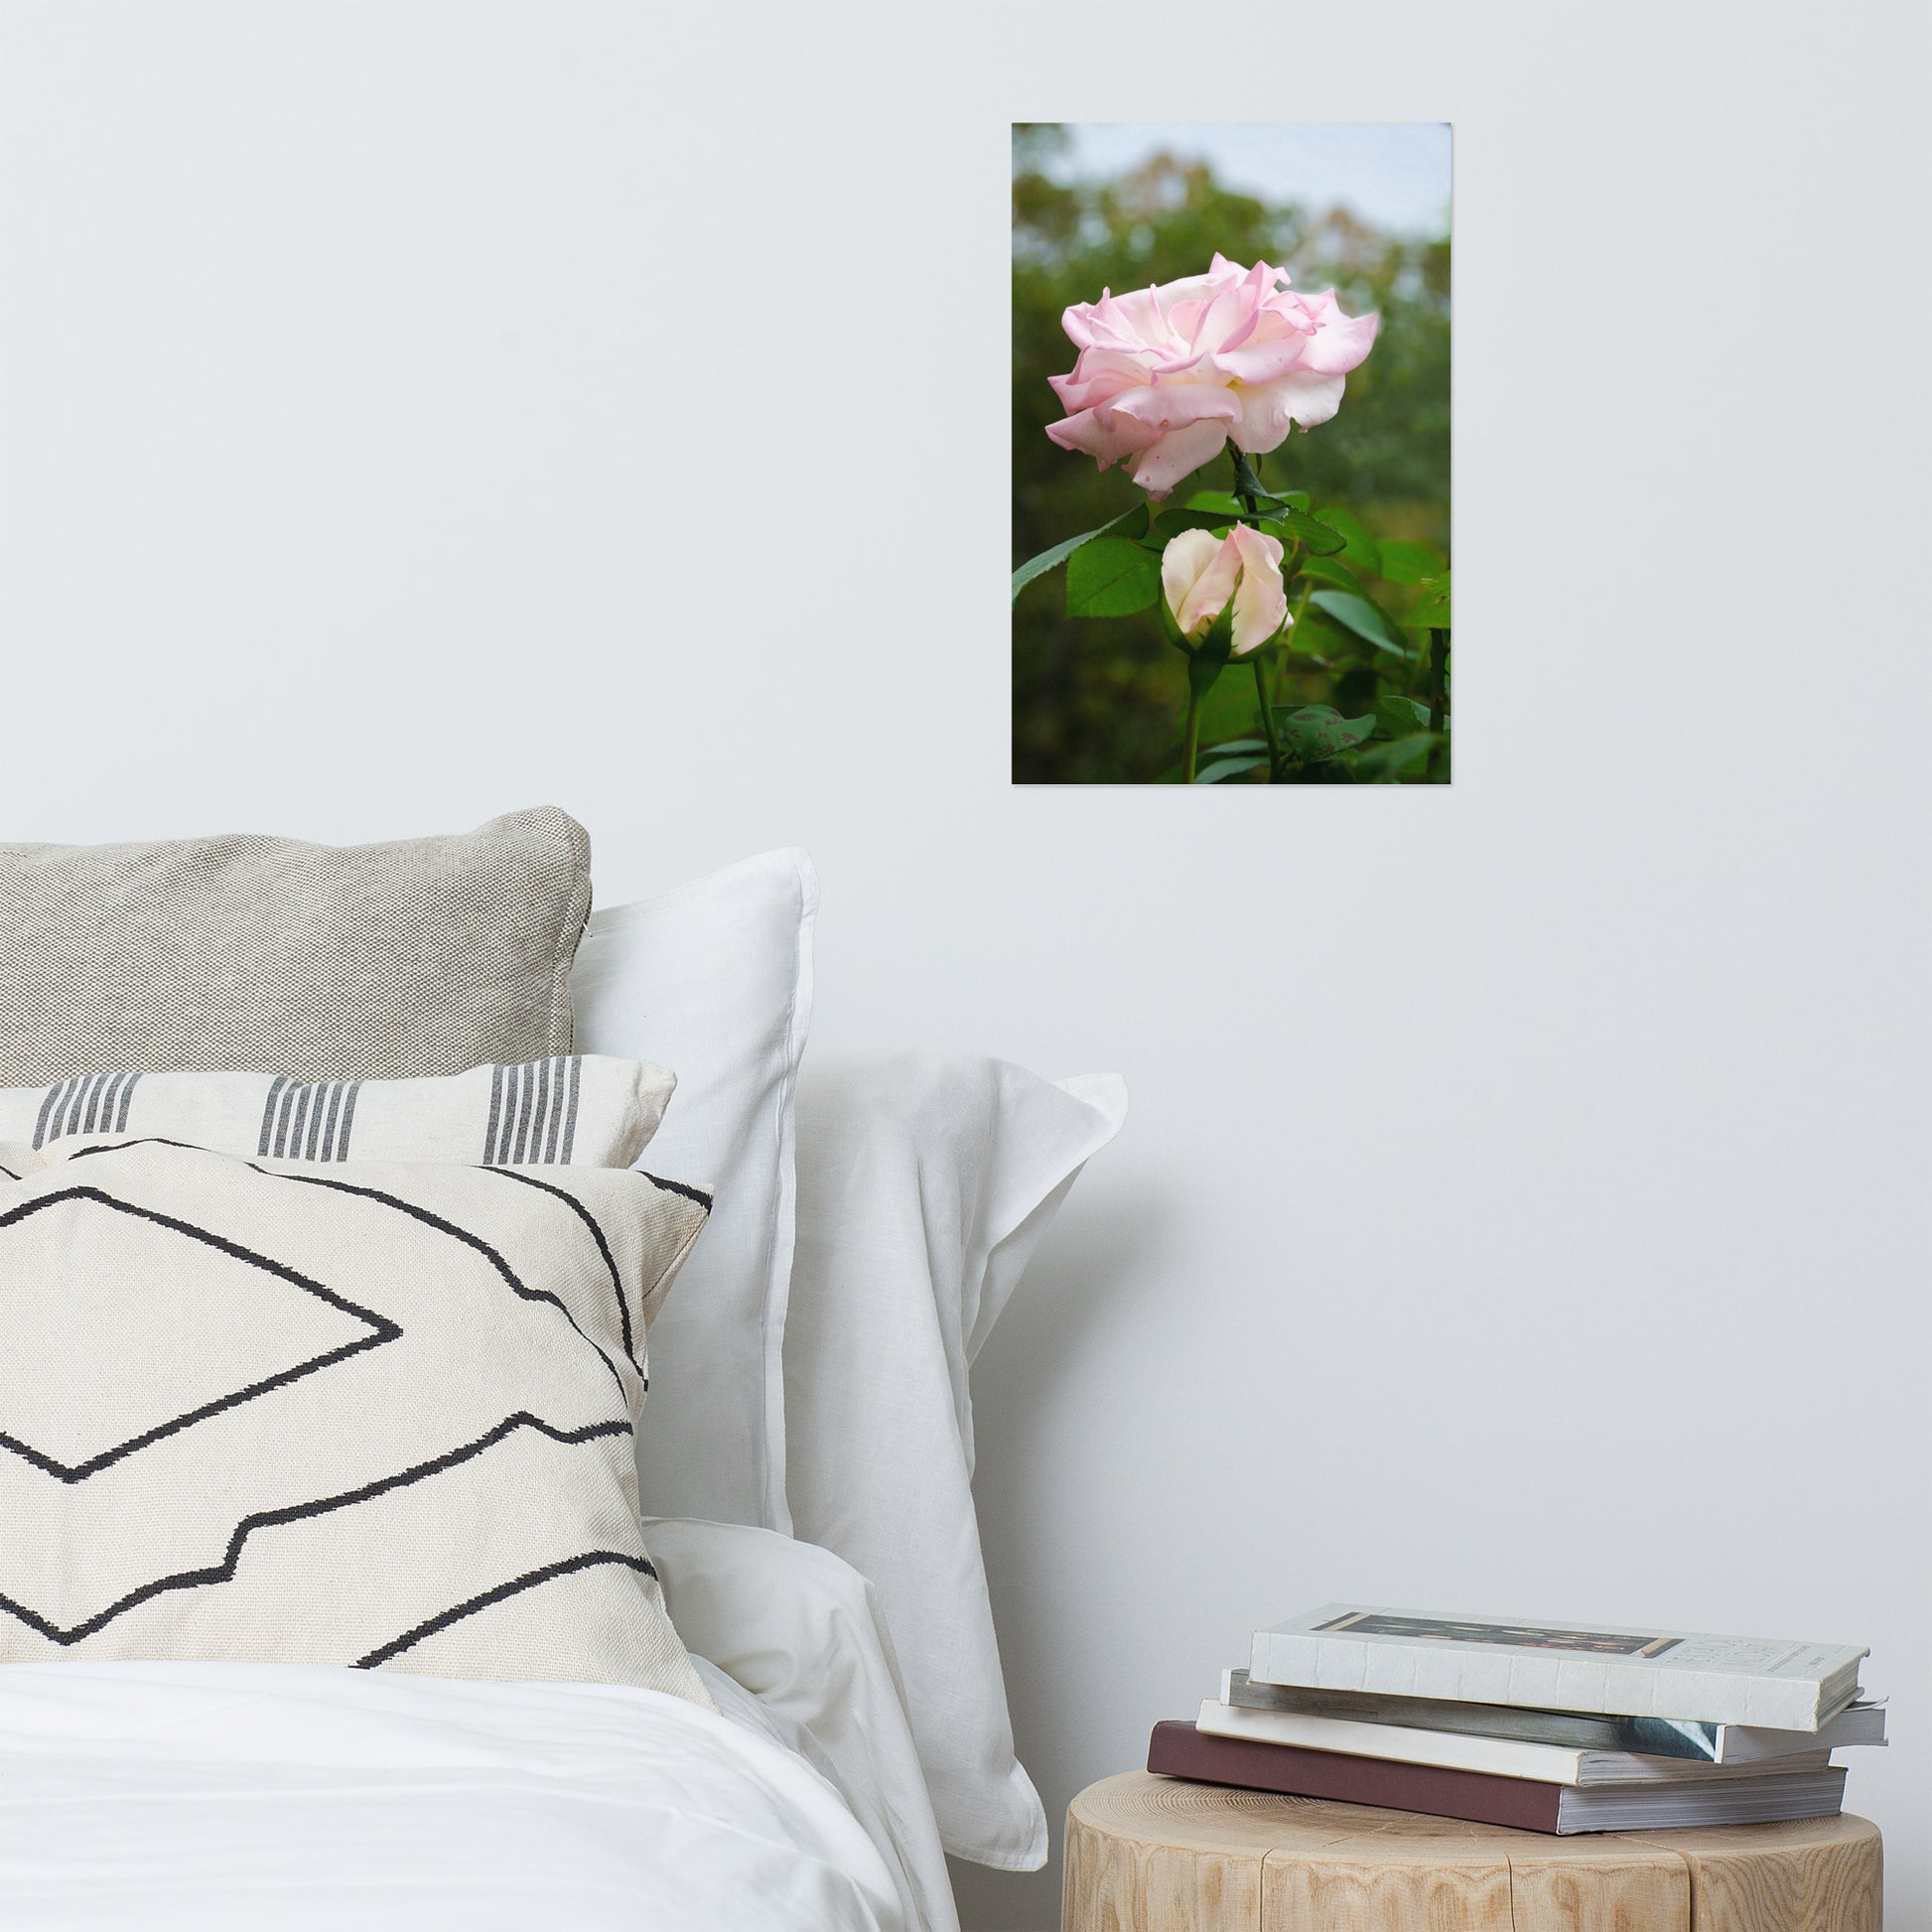 Wall Print Flower: Admiration Rose - Botanical / Floral / Flora / Flowers / Nature Photograph Loose / Unframed / Frameless / Frameable Wall Art Print - Artwork